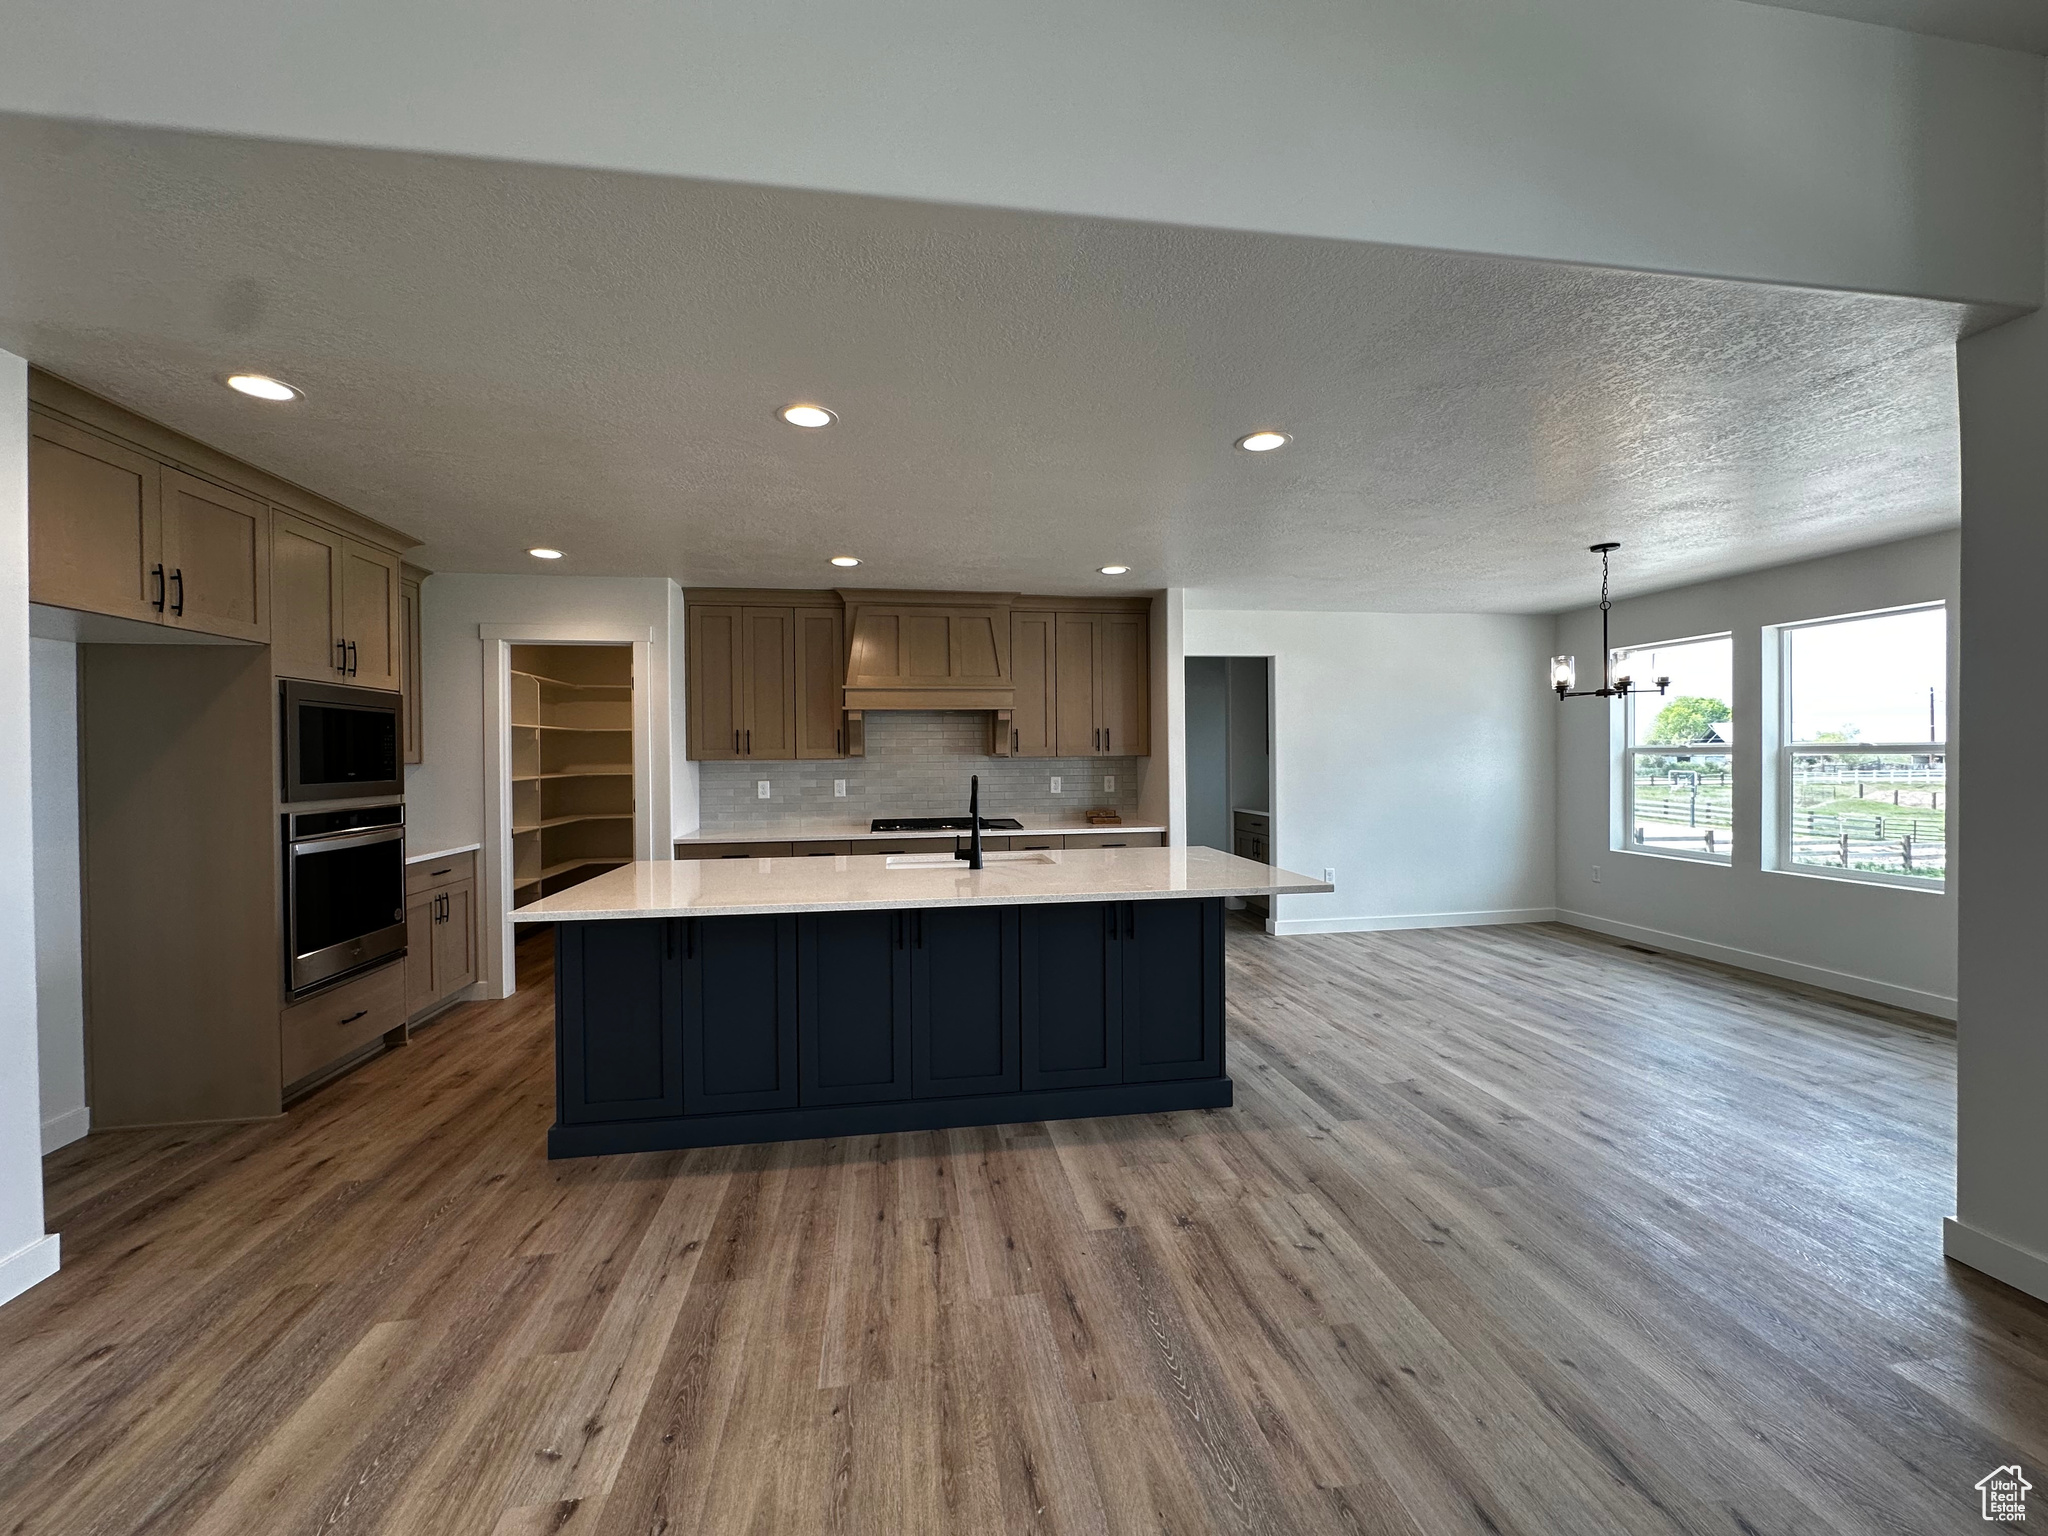 Kitchen featuring premium range hood, hardwood / wood-style floors, stainless steel microwave, tasteful backsplash, and an island with sink